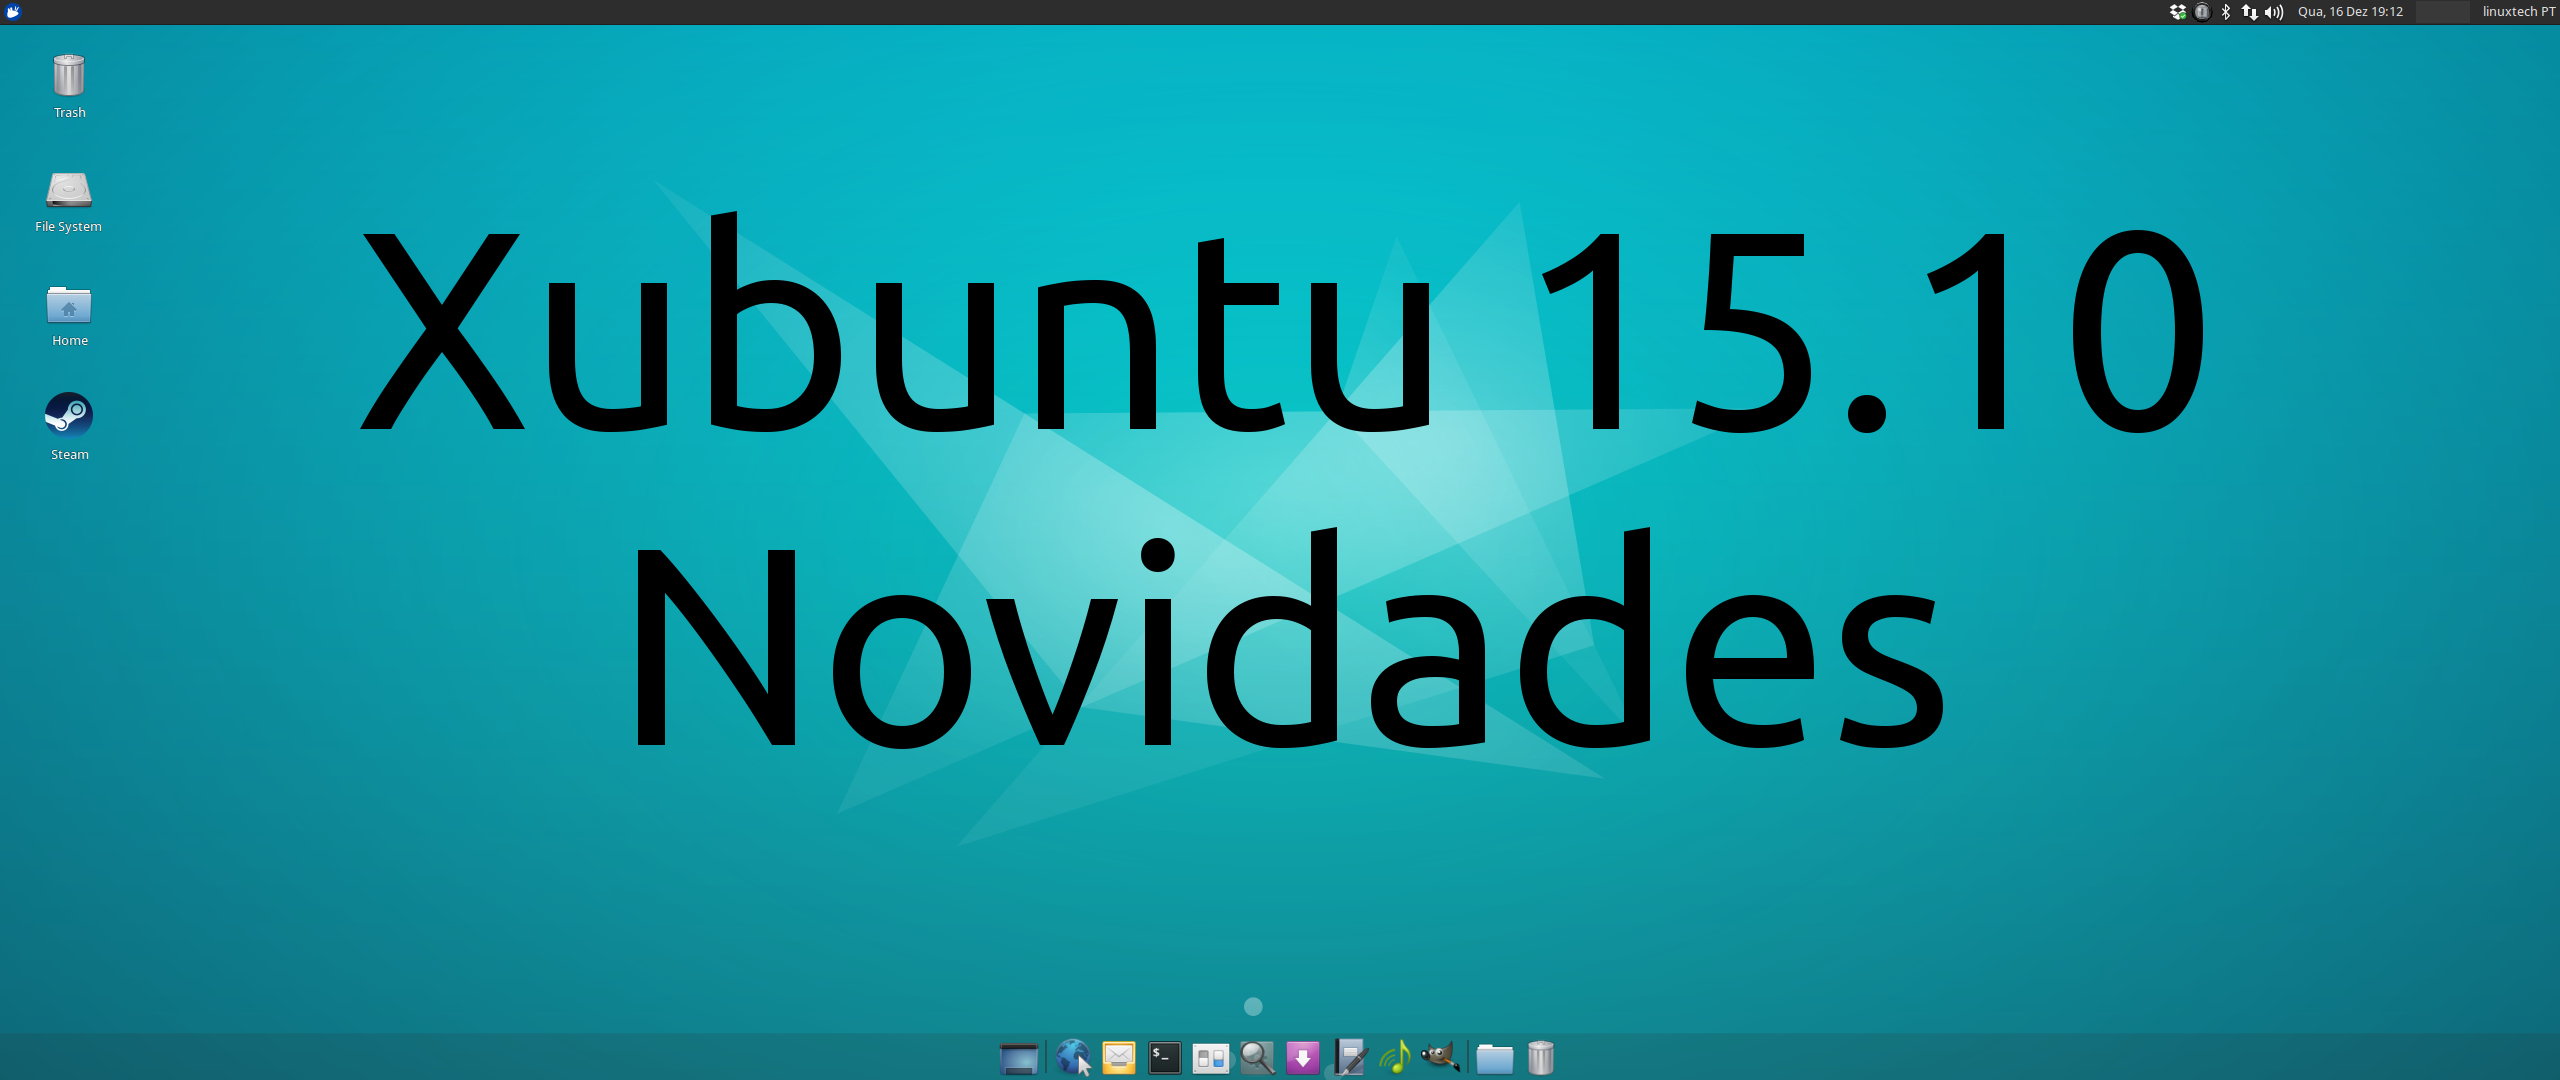 Xubuntu 15.10 – Quais as novidades